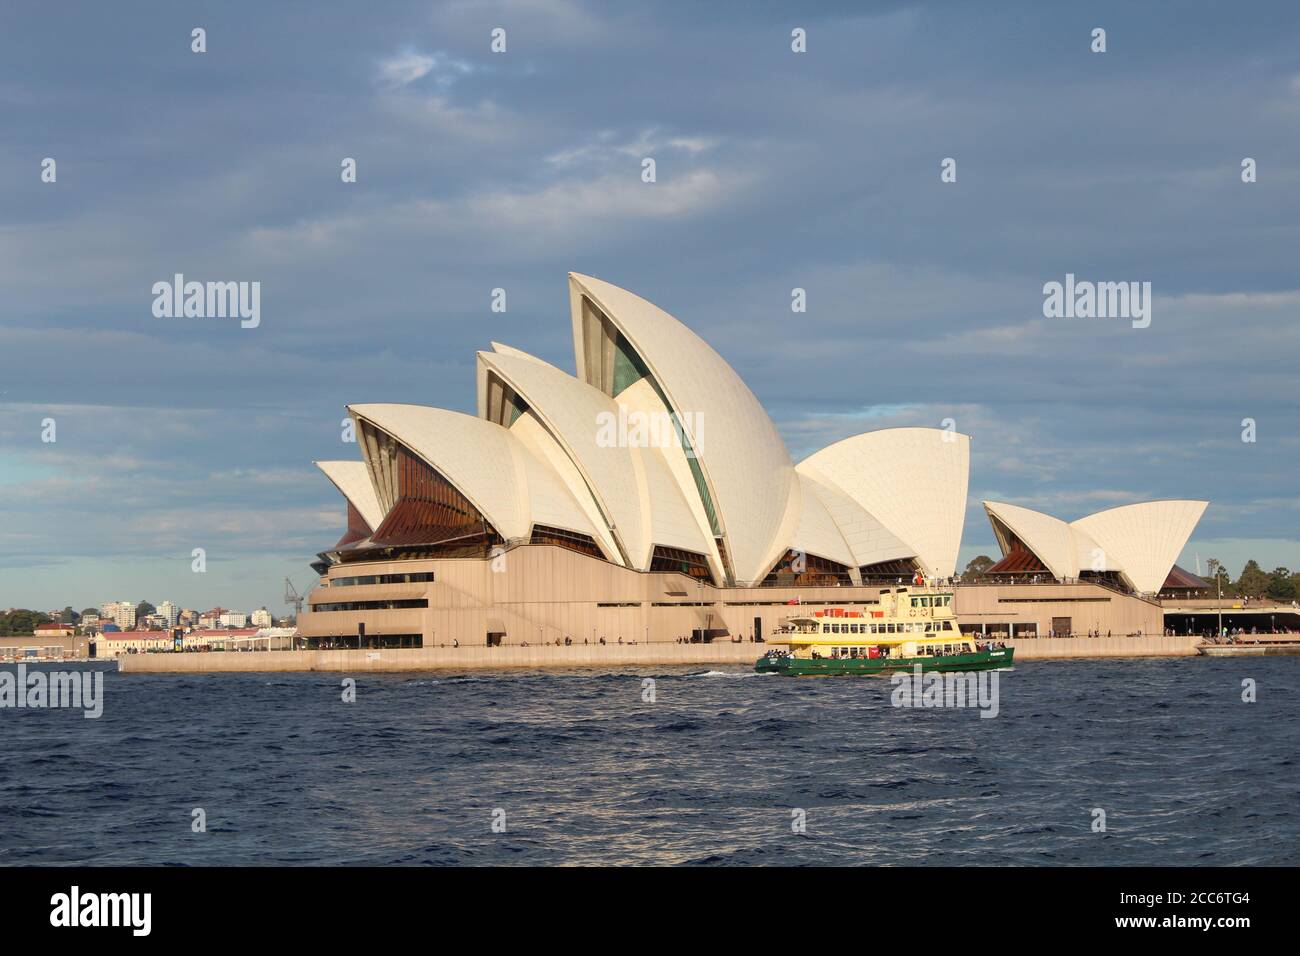 AUSTRALIA, SYDNEY, SYDNEY HARBOUR, BENNELONG POINT, 31 LUGLIO 2016: Il traghetto 'FISHBURN' passa davanti alla Sydney Opera House Foto Stock